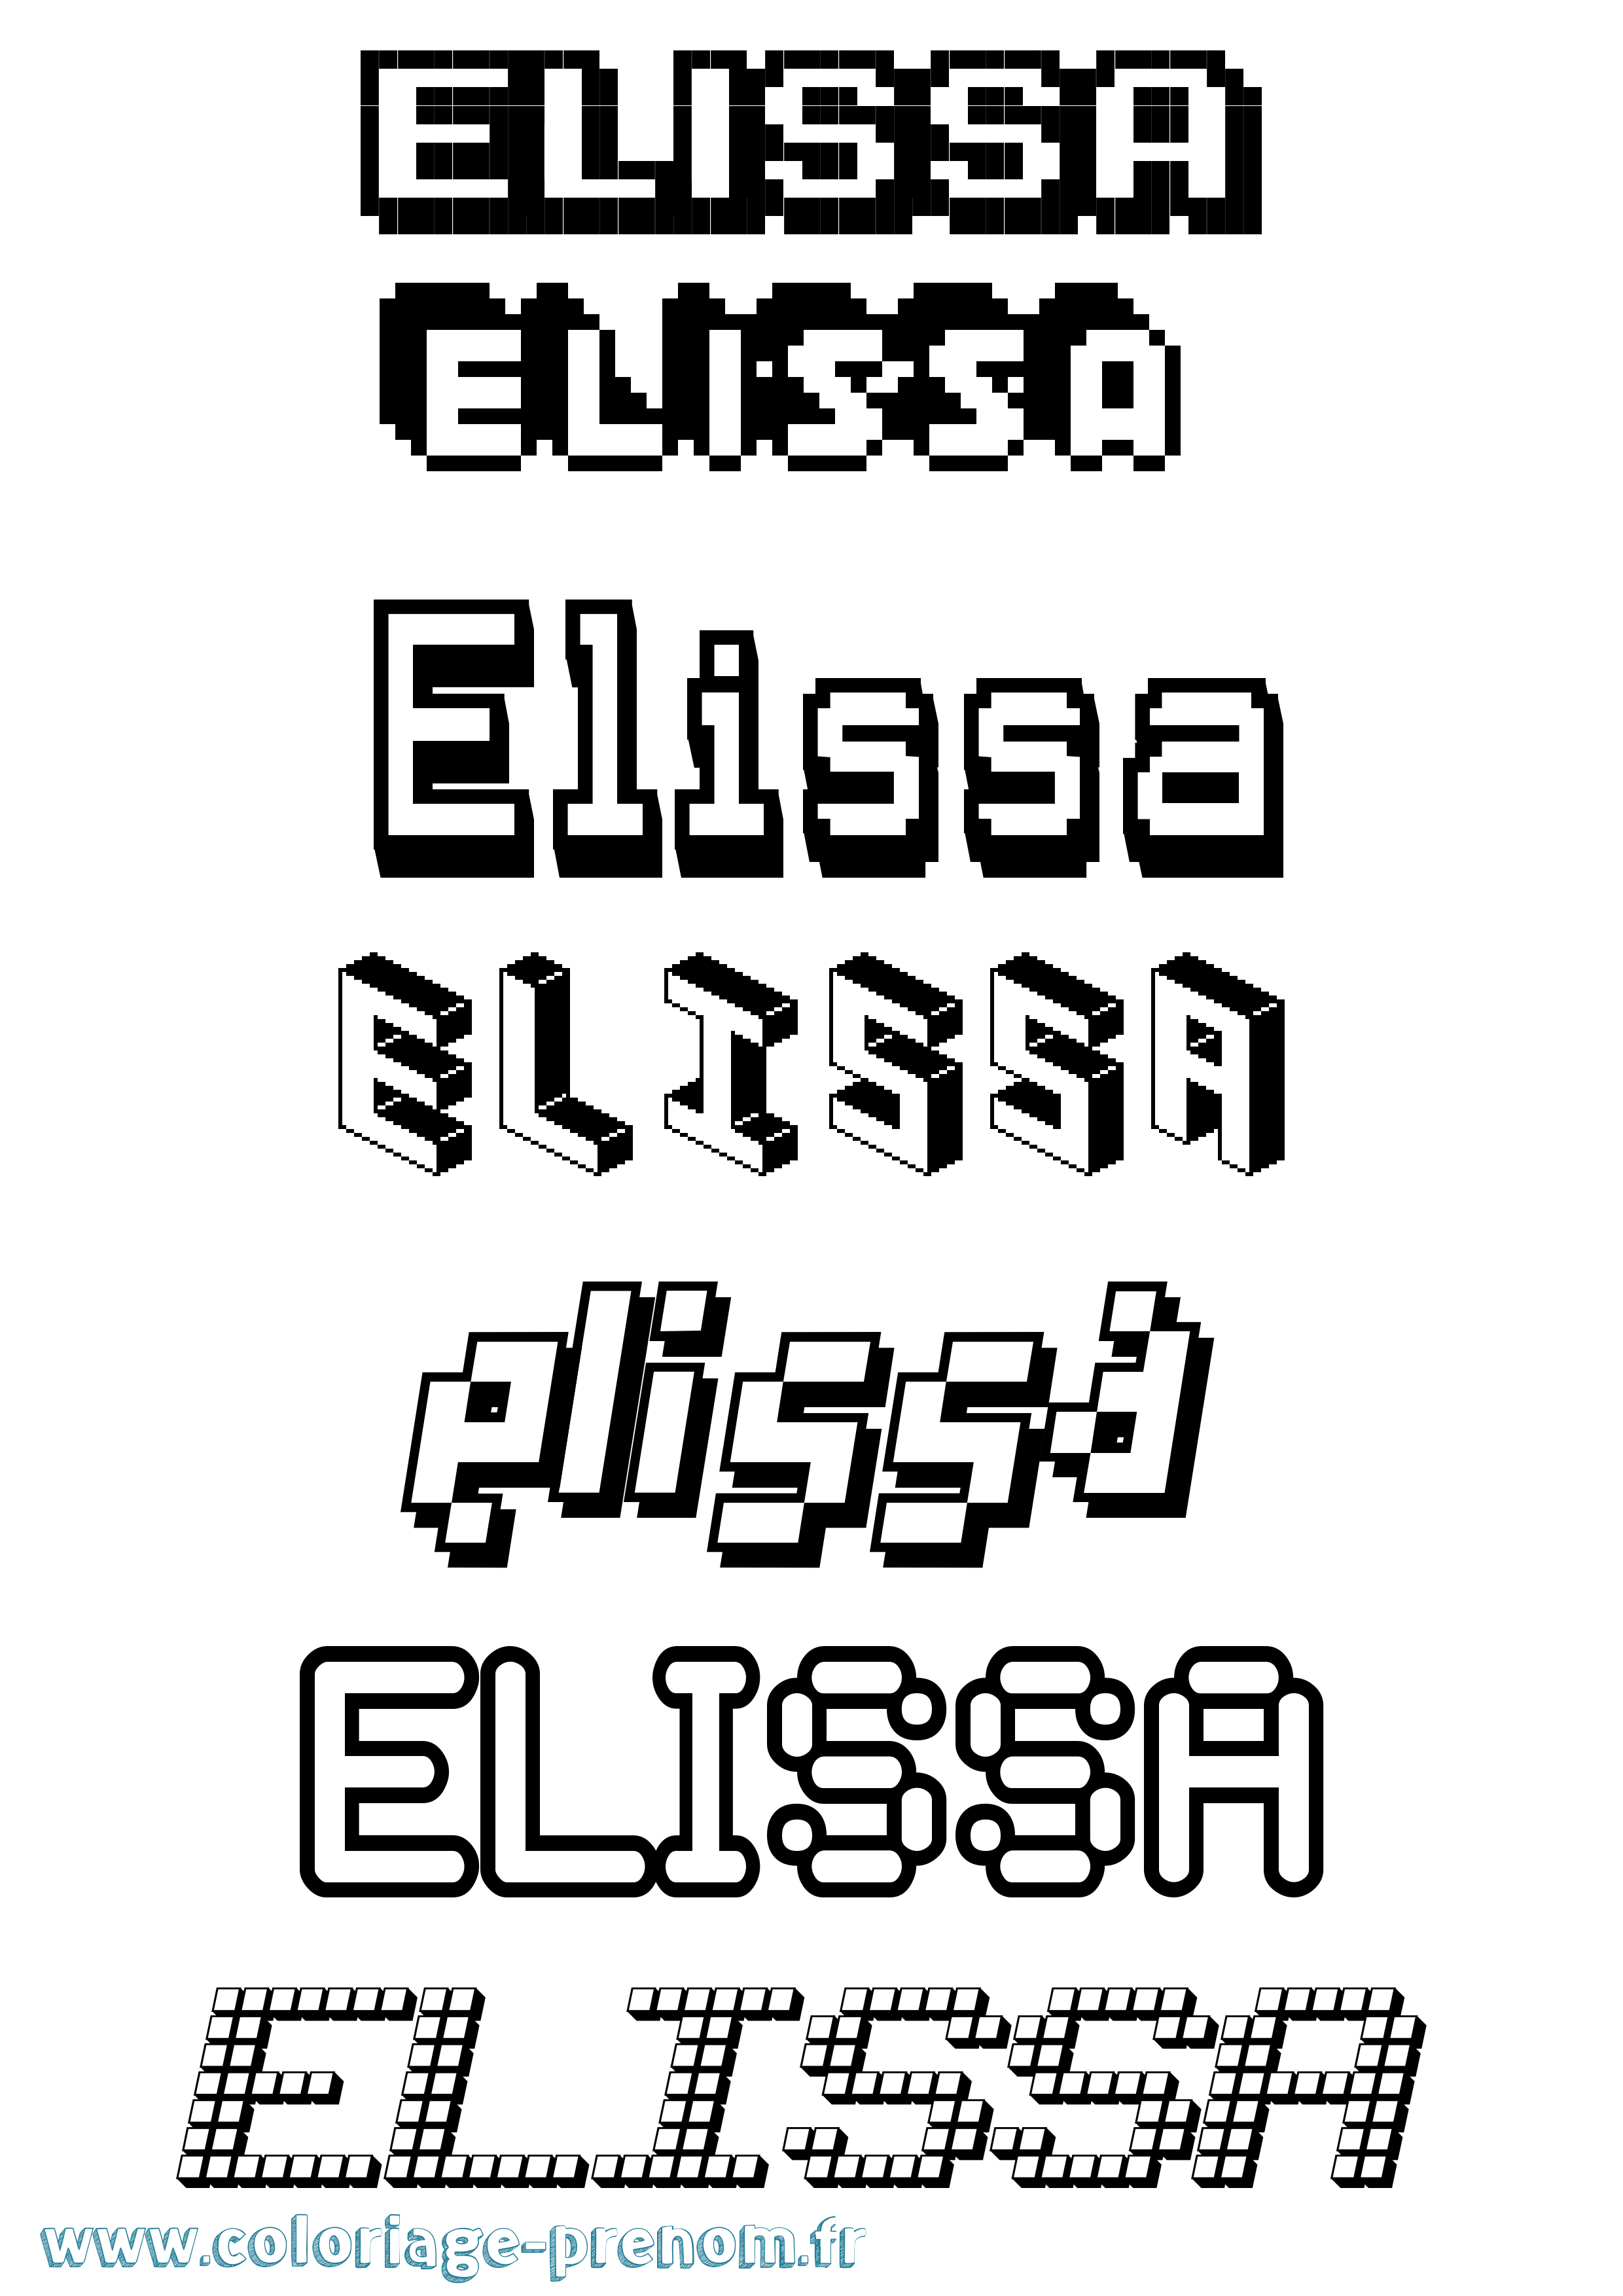 Coloriage prénom Elissa Pixel